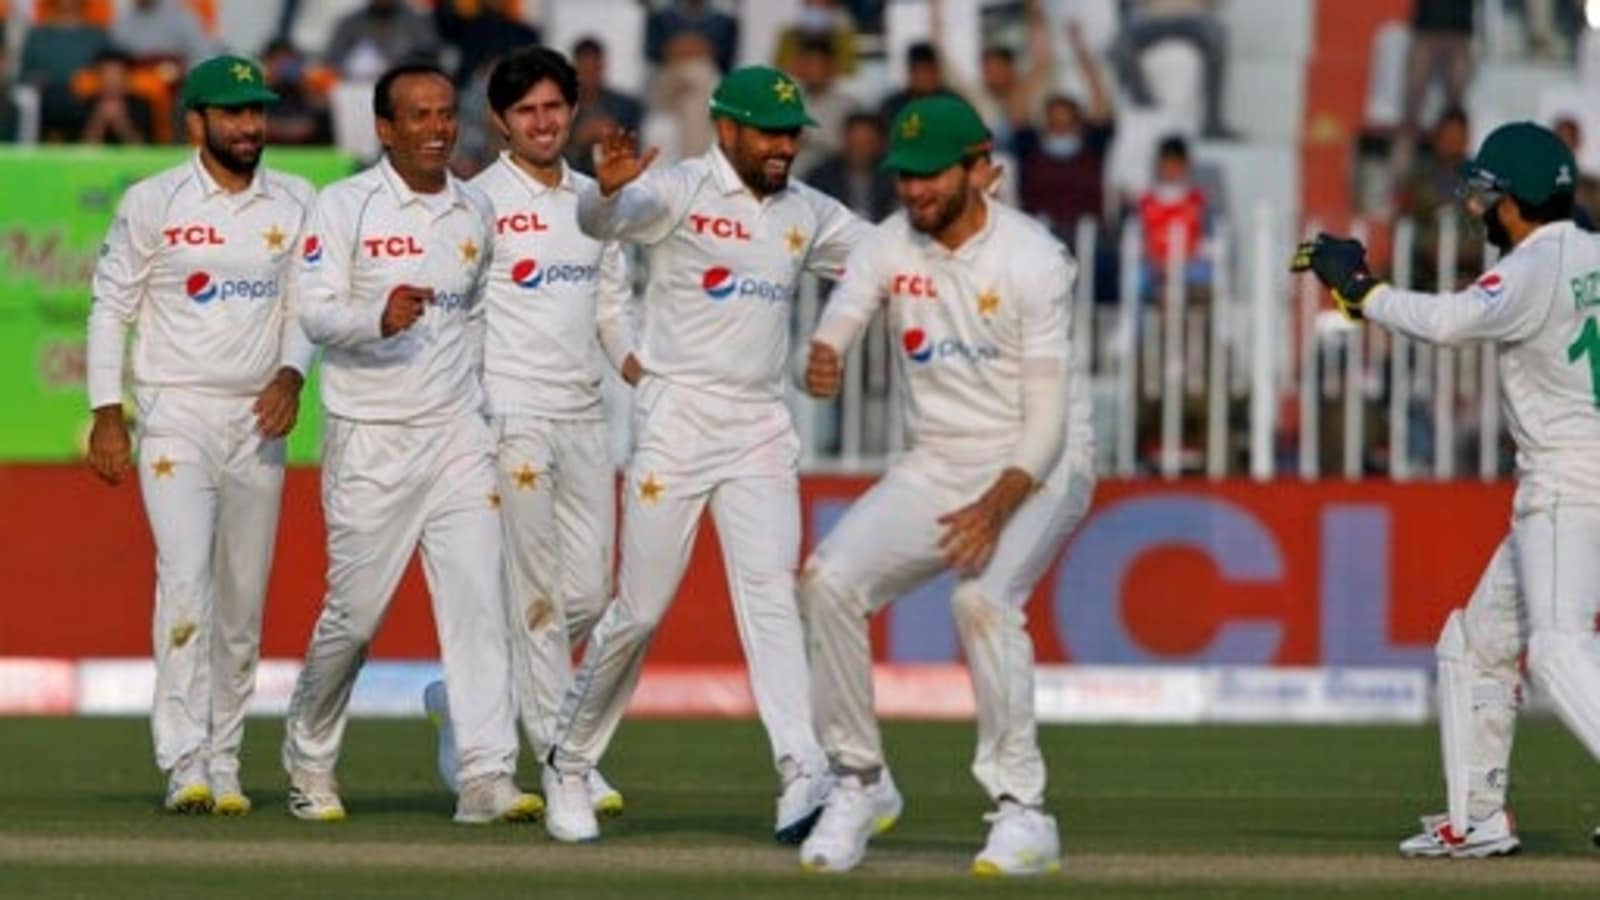 Pakistan vs Australia Live Score, 1st Test Day 5 Live updates from Rawalpindi Cricket